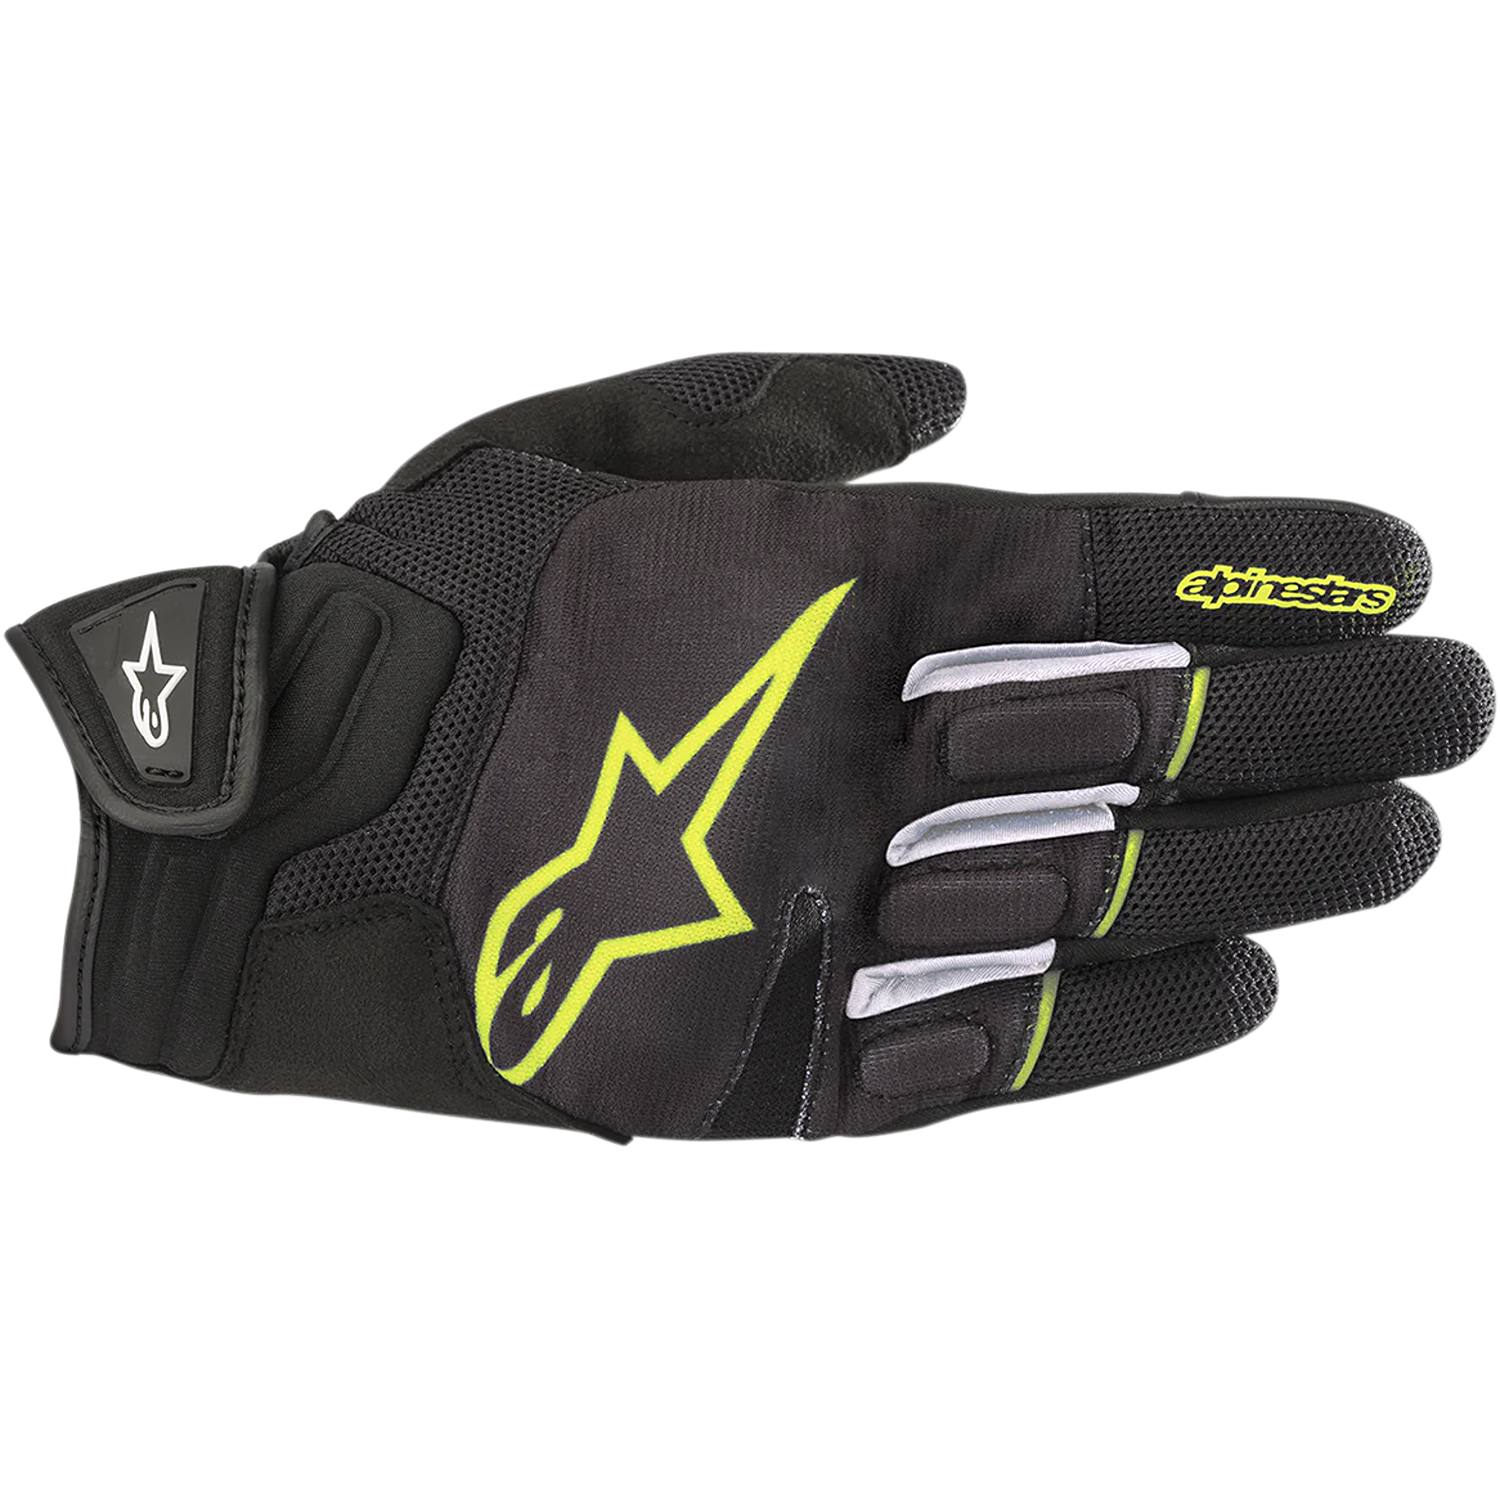 Image of EU Alpinestars Atom Gloves Black Fluo Yellow Taille S